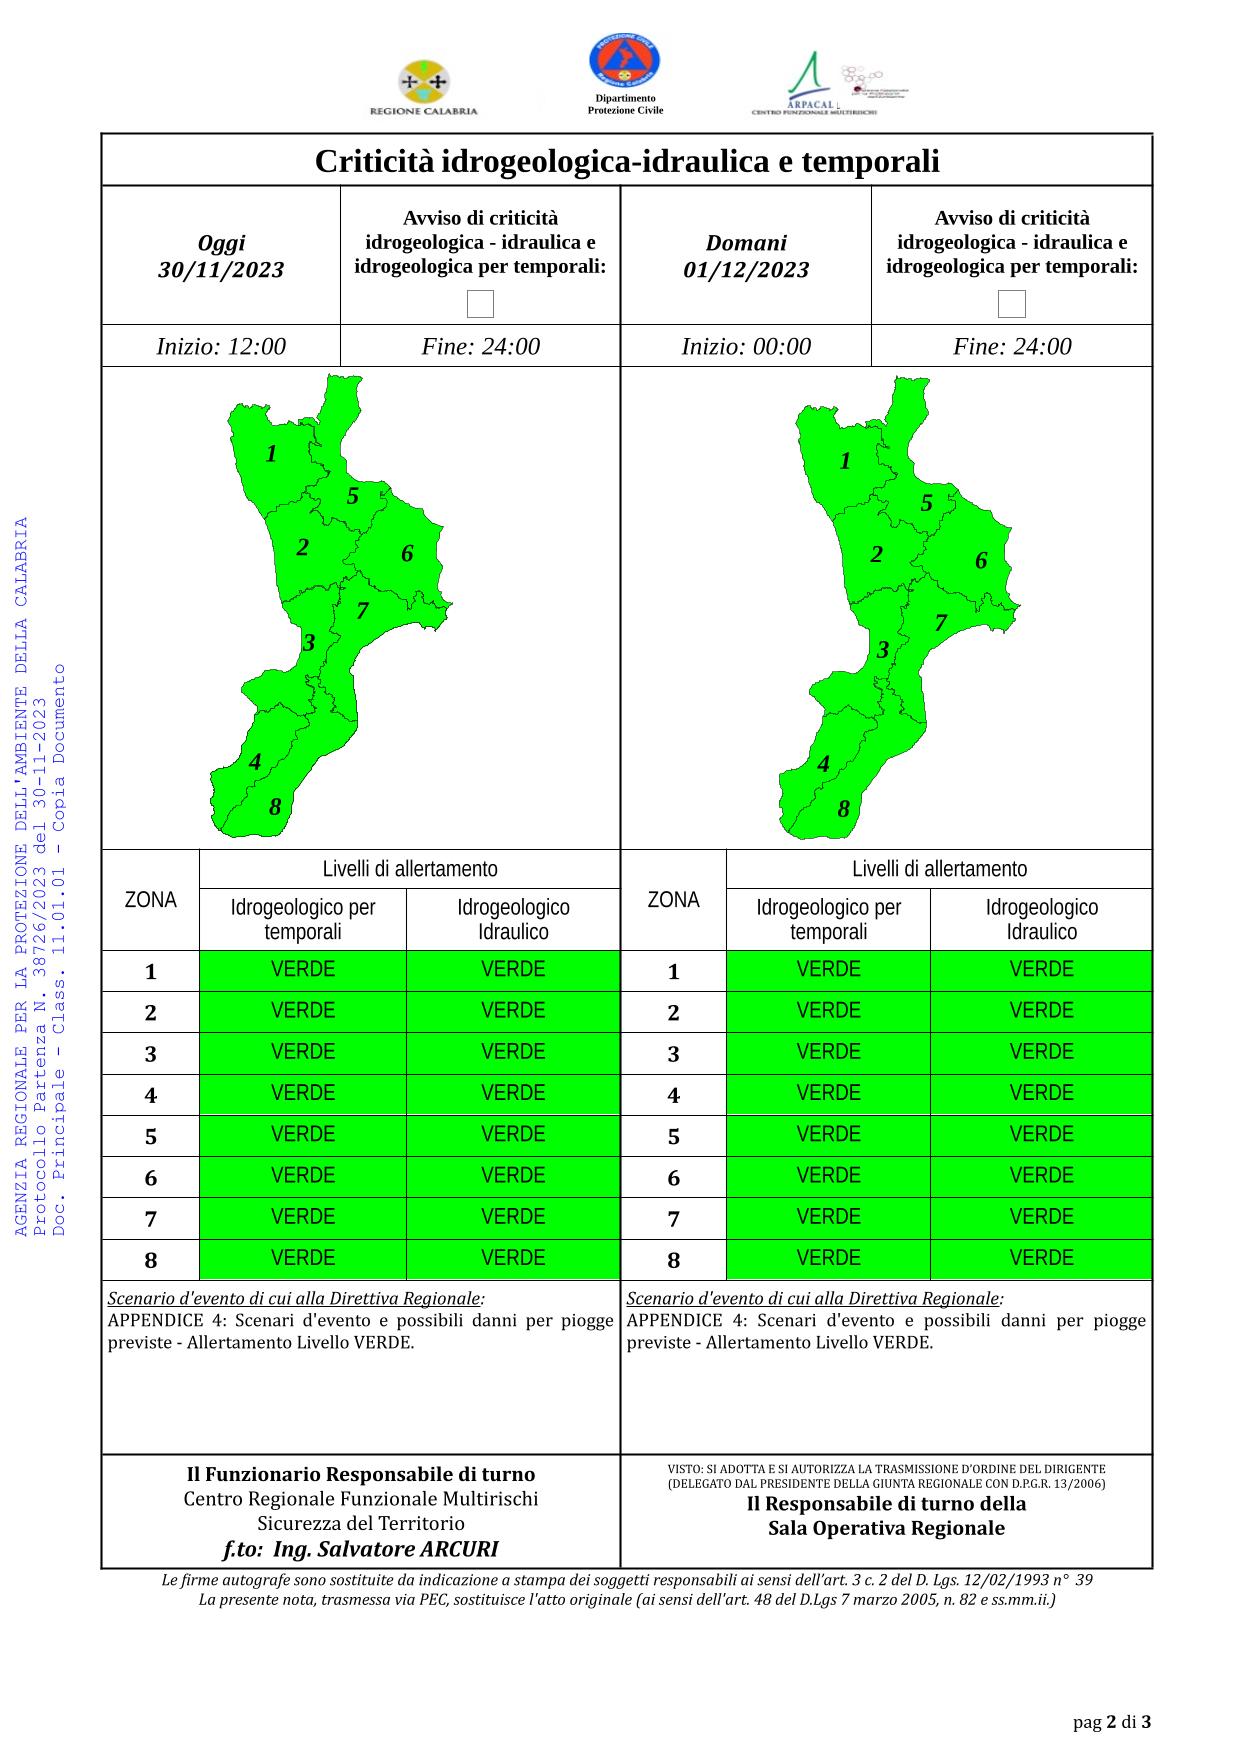 Criticità idrogeologica-idraulica e temporali in Calabria 30-11-2023